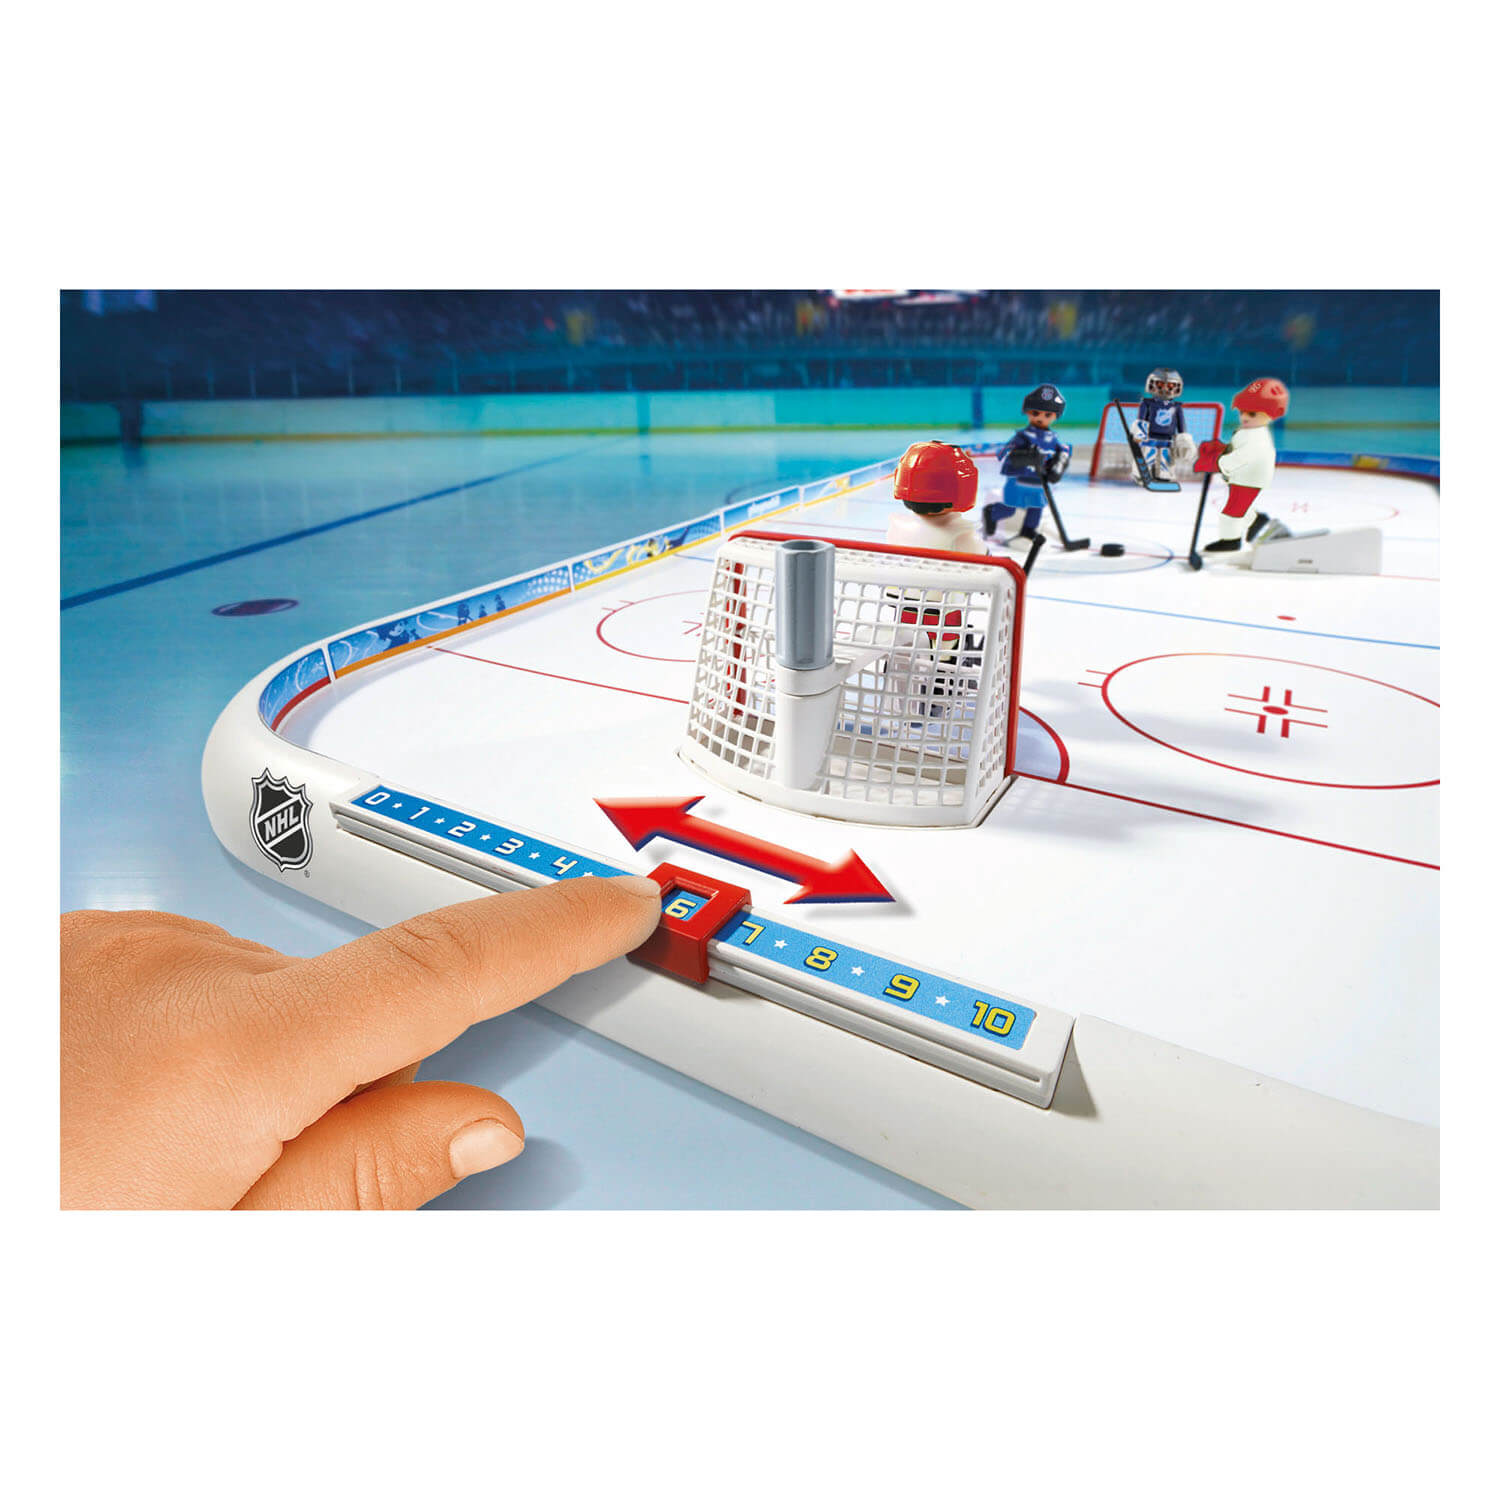 PLAYMOBIL NHL Hockey Arena (5068)